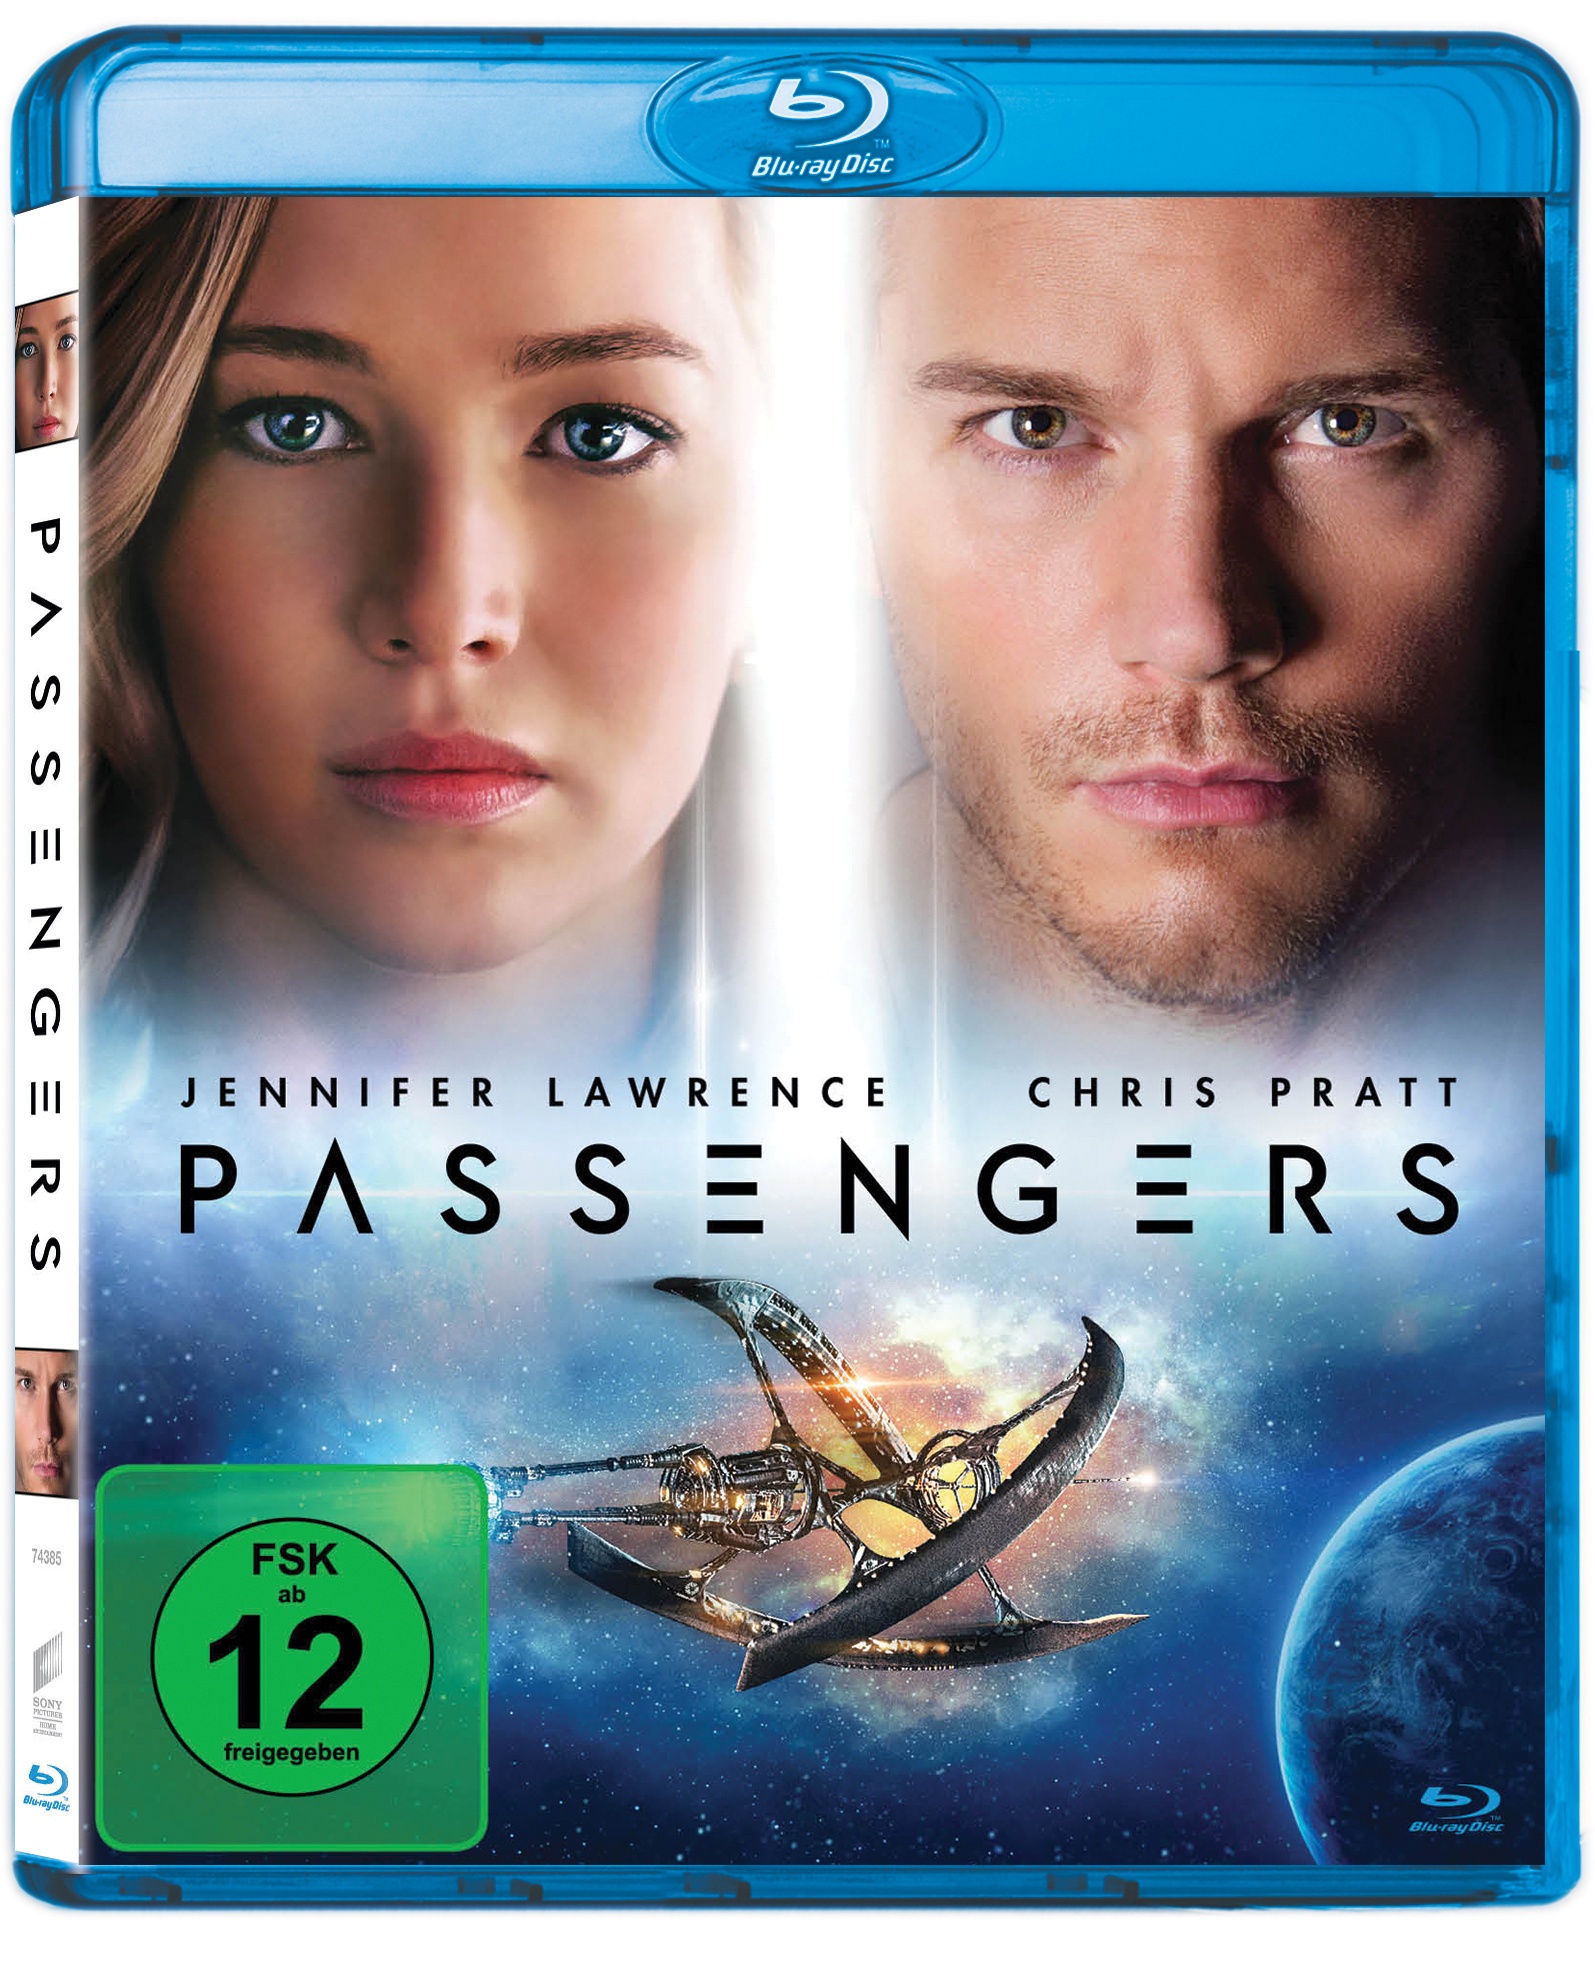 Passengers (Blu-ray)